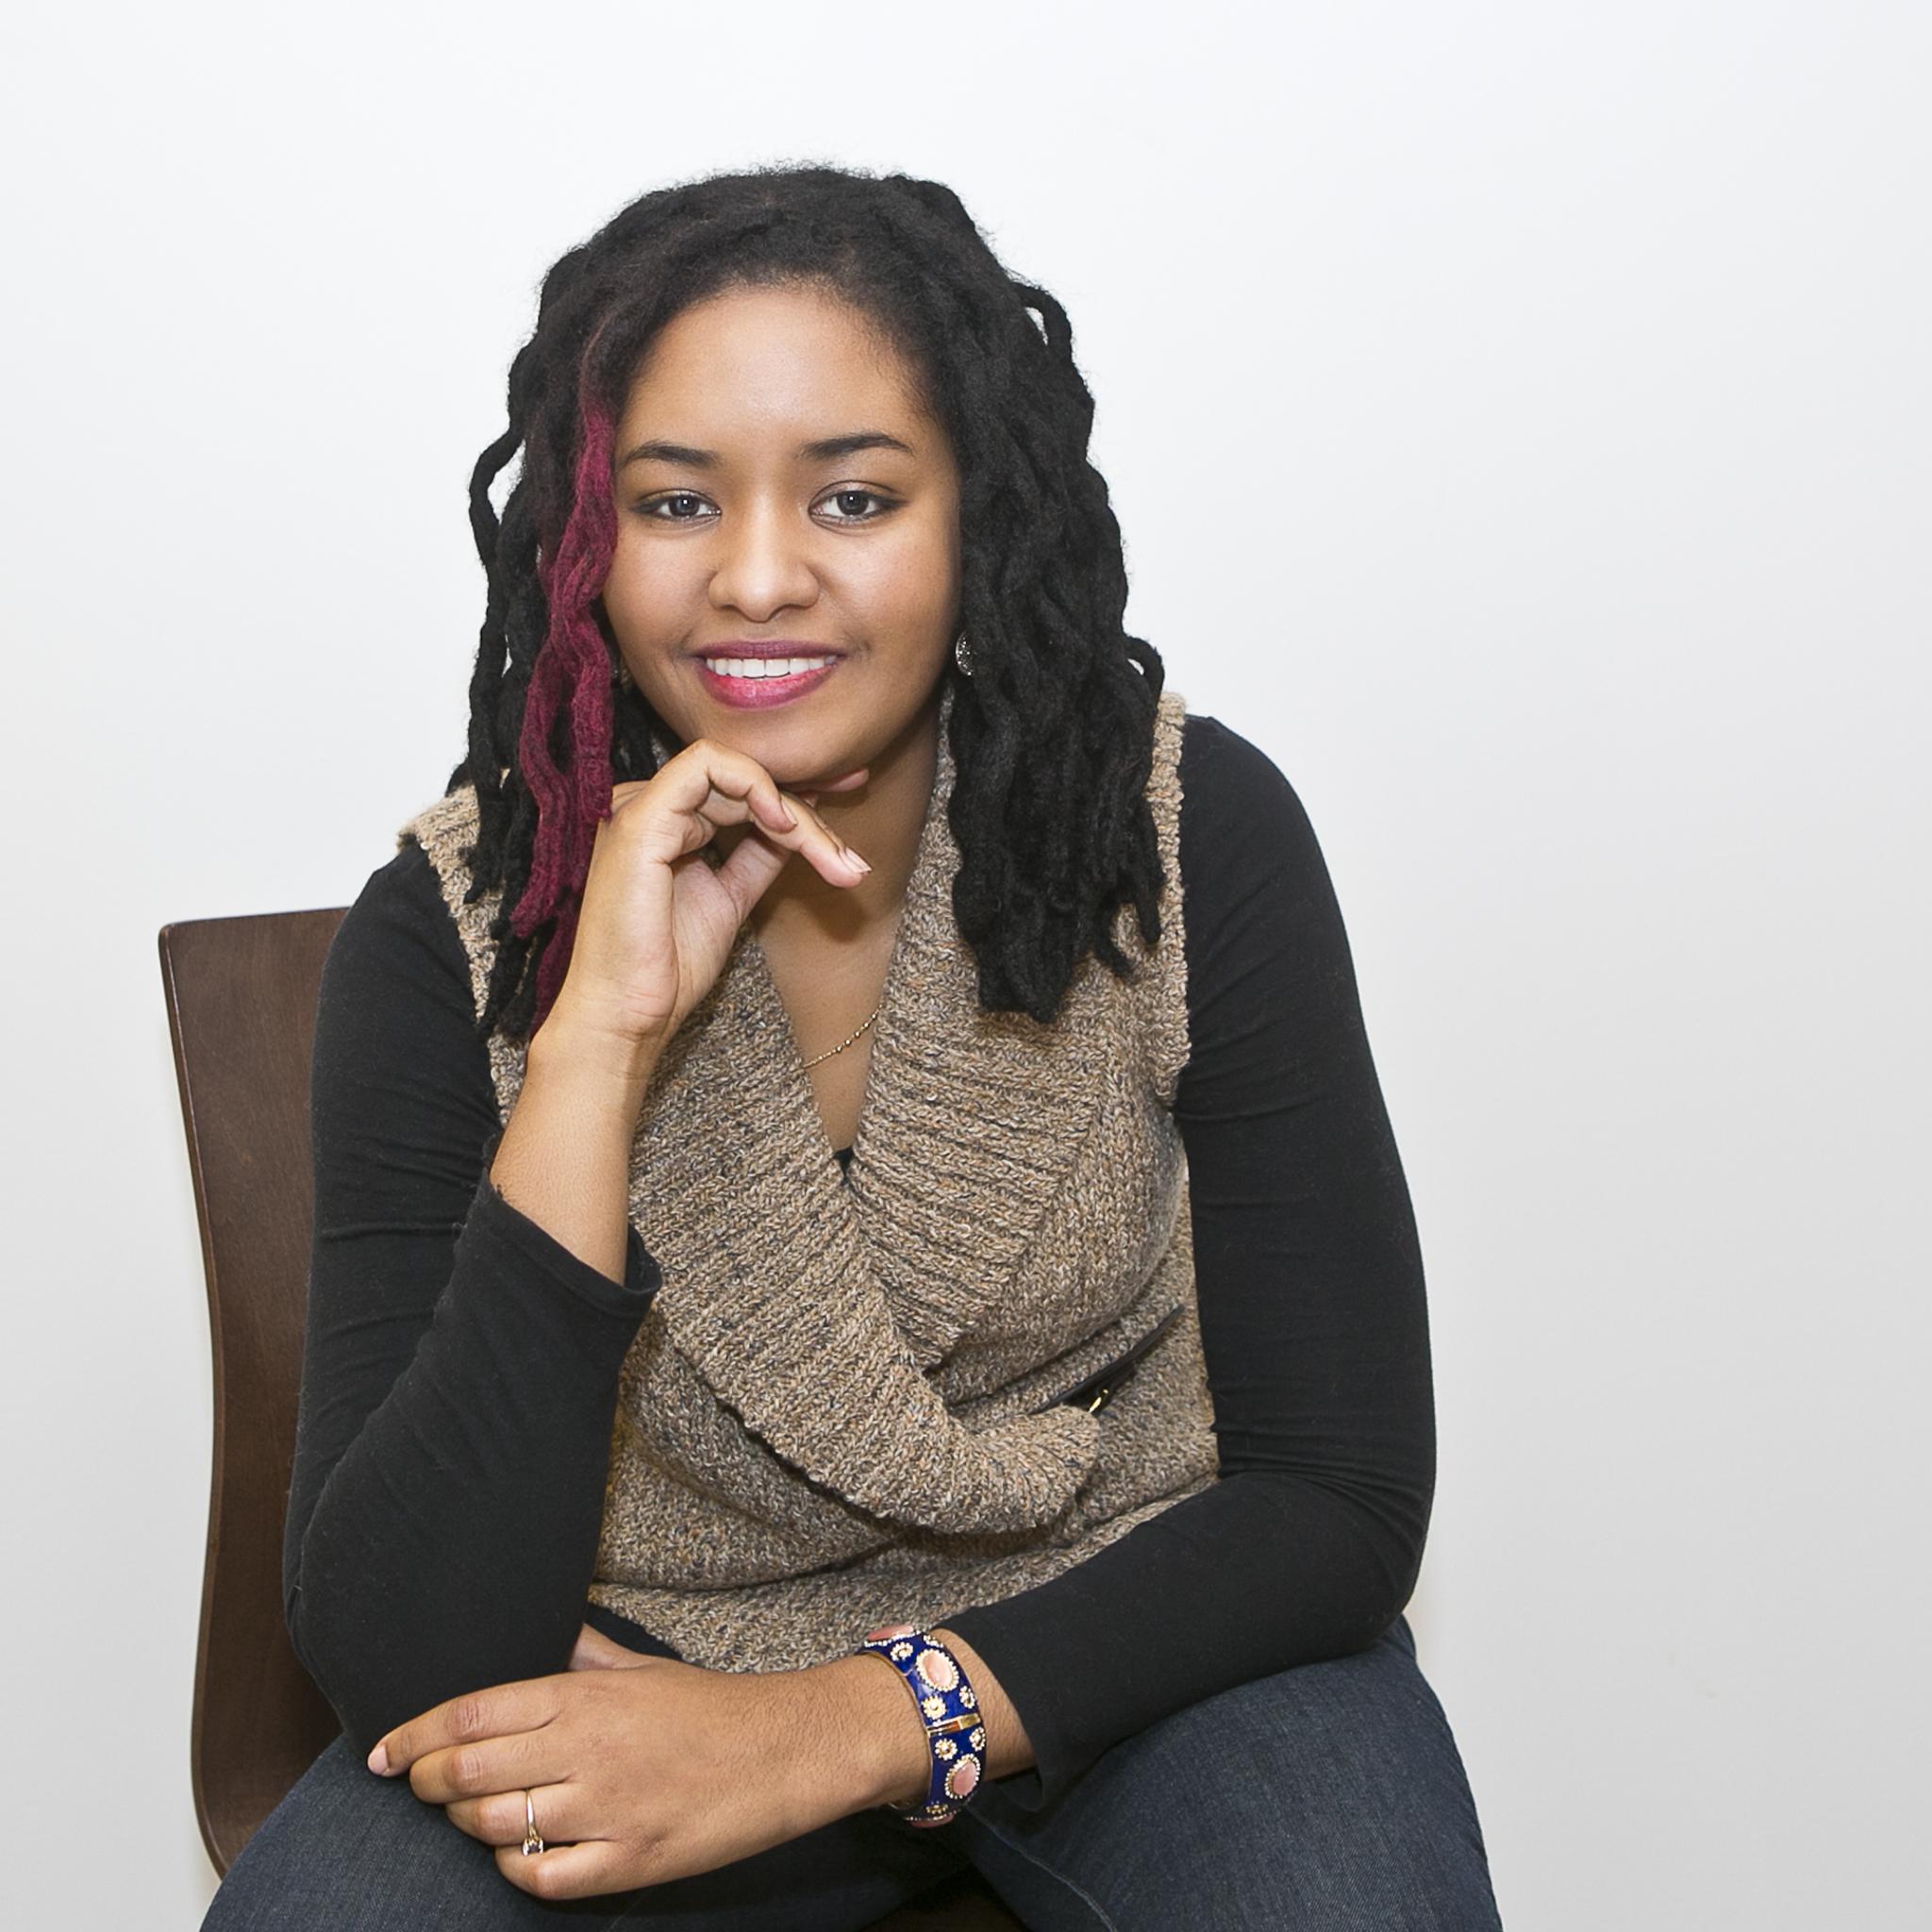 Watch 2014 ESSENCE's Black Women in Hollywood Short Film Online Now!